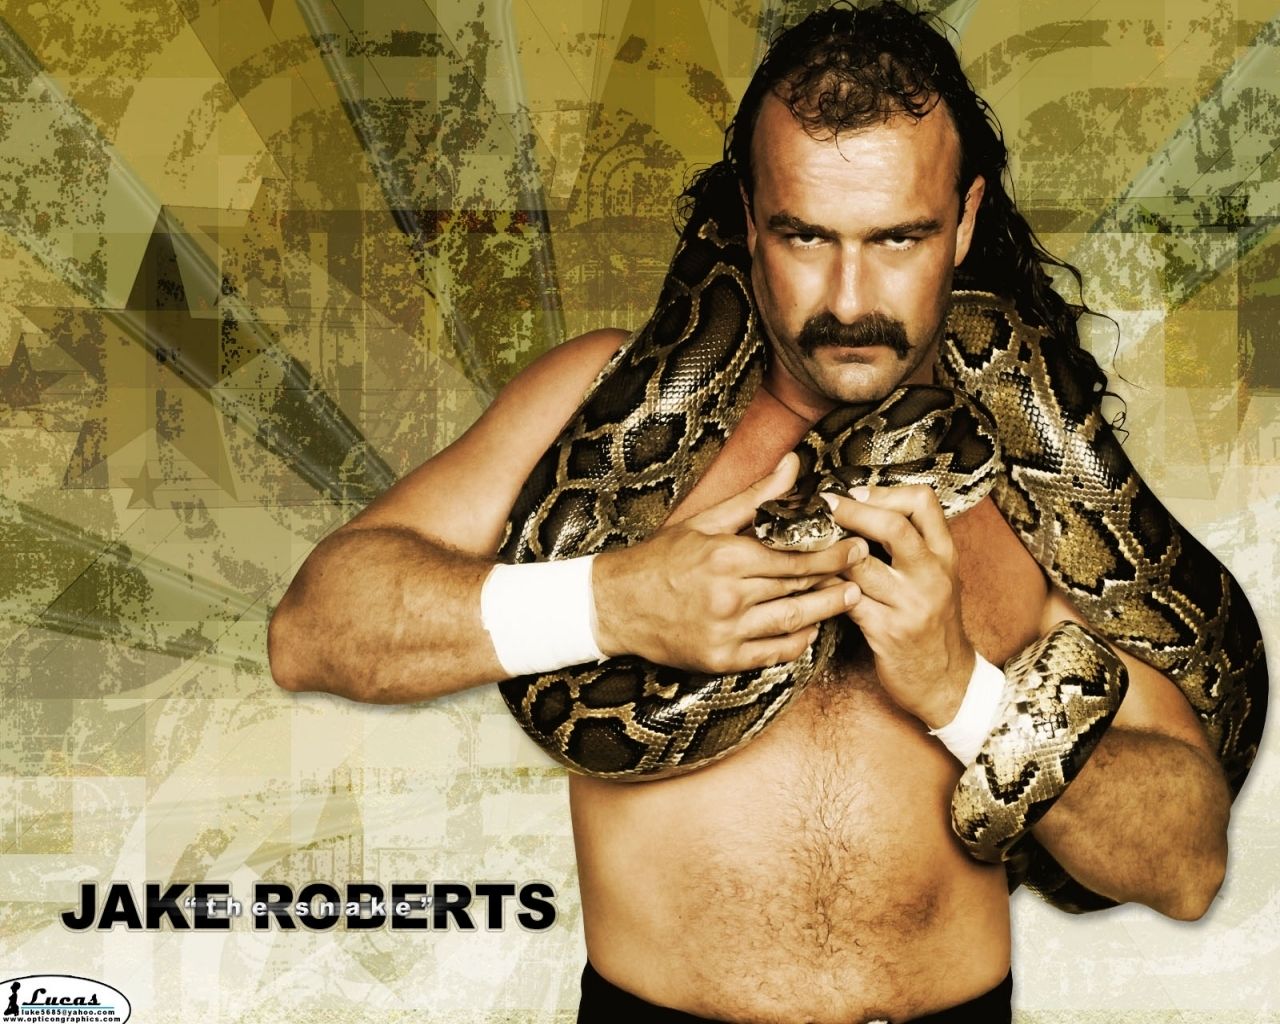 Jake the Snake. Jake the snake roberts, Professional wrestling, Wrestling